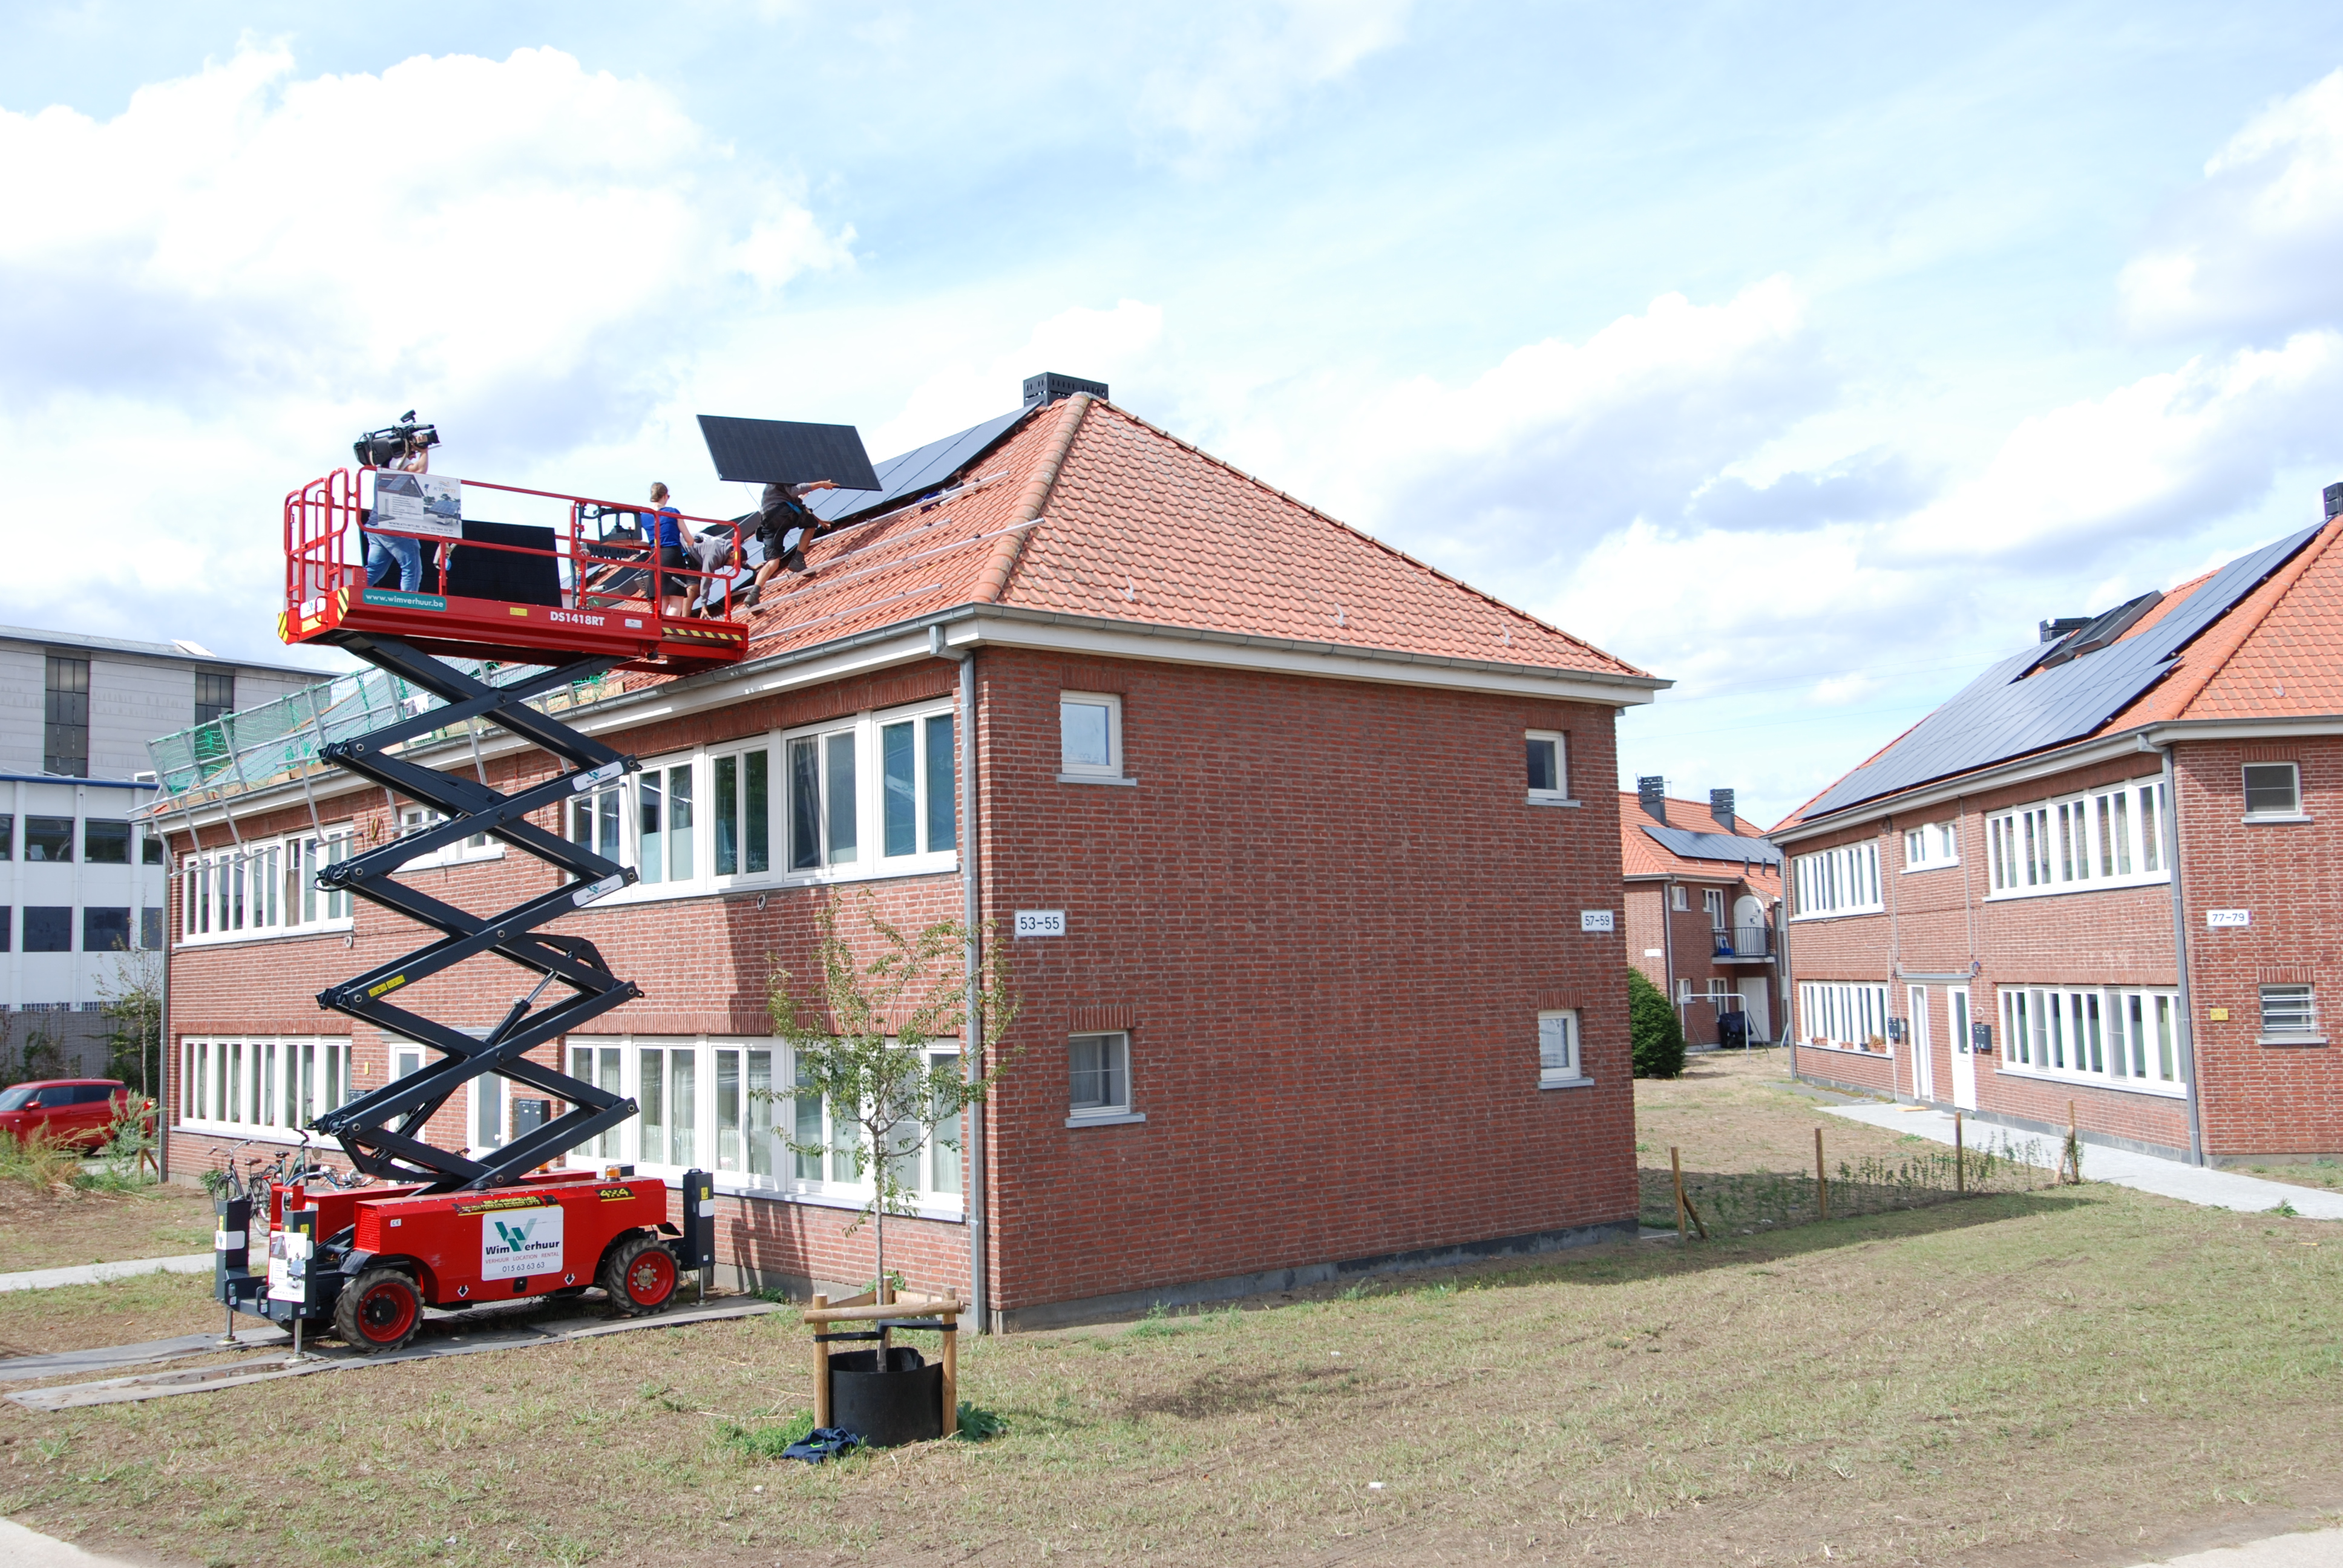 Installing solar panels in an energy community in social housing district in Mechelen, Flanders